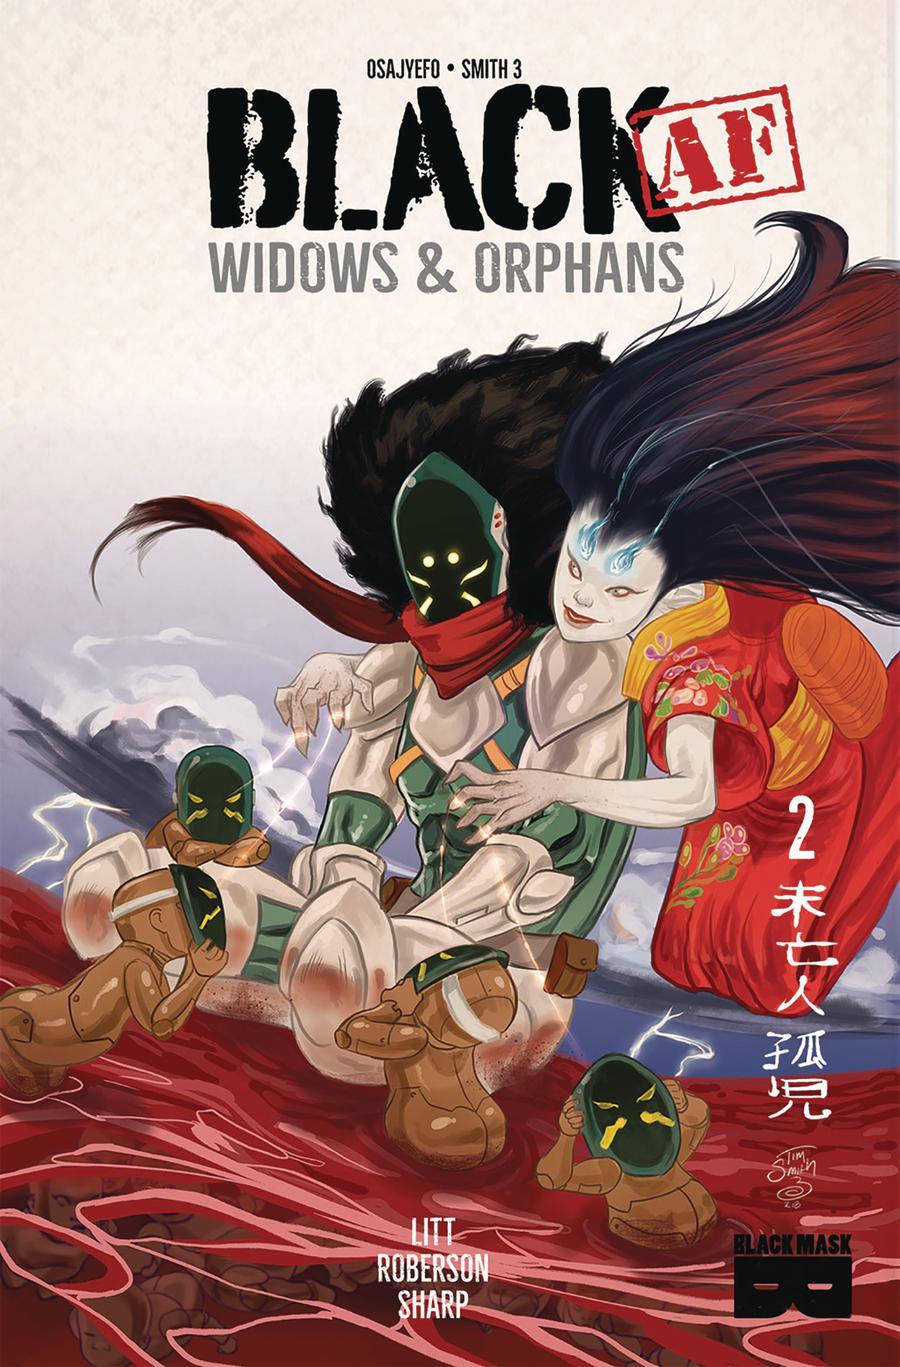 Black [AF] Widows & Orphans Vol. 1 #2